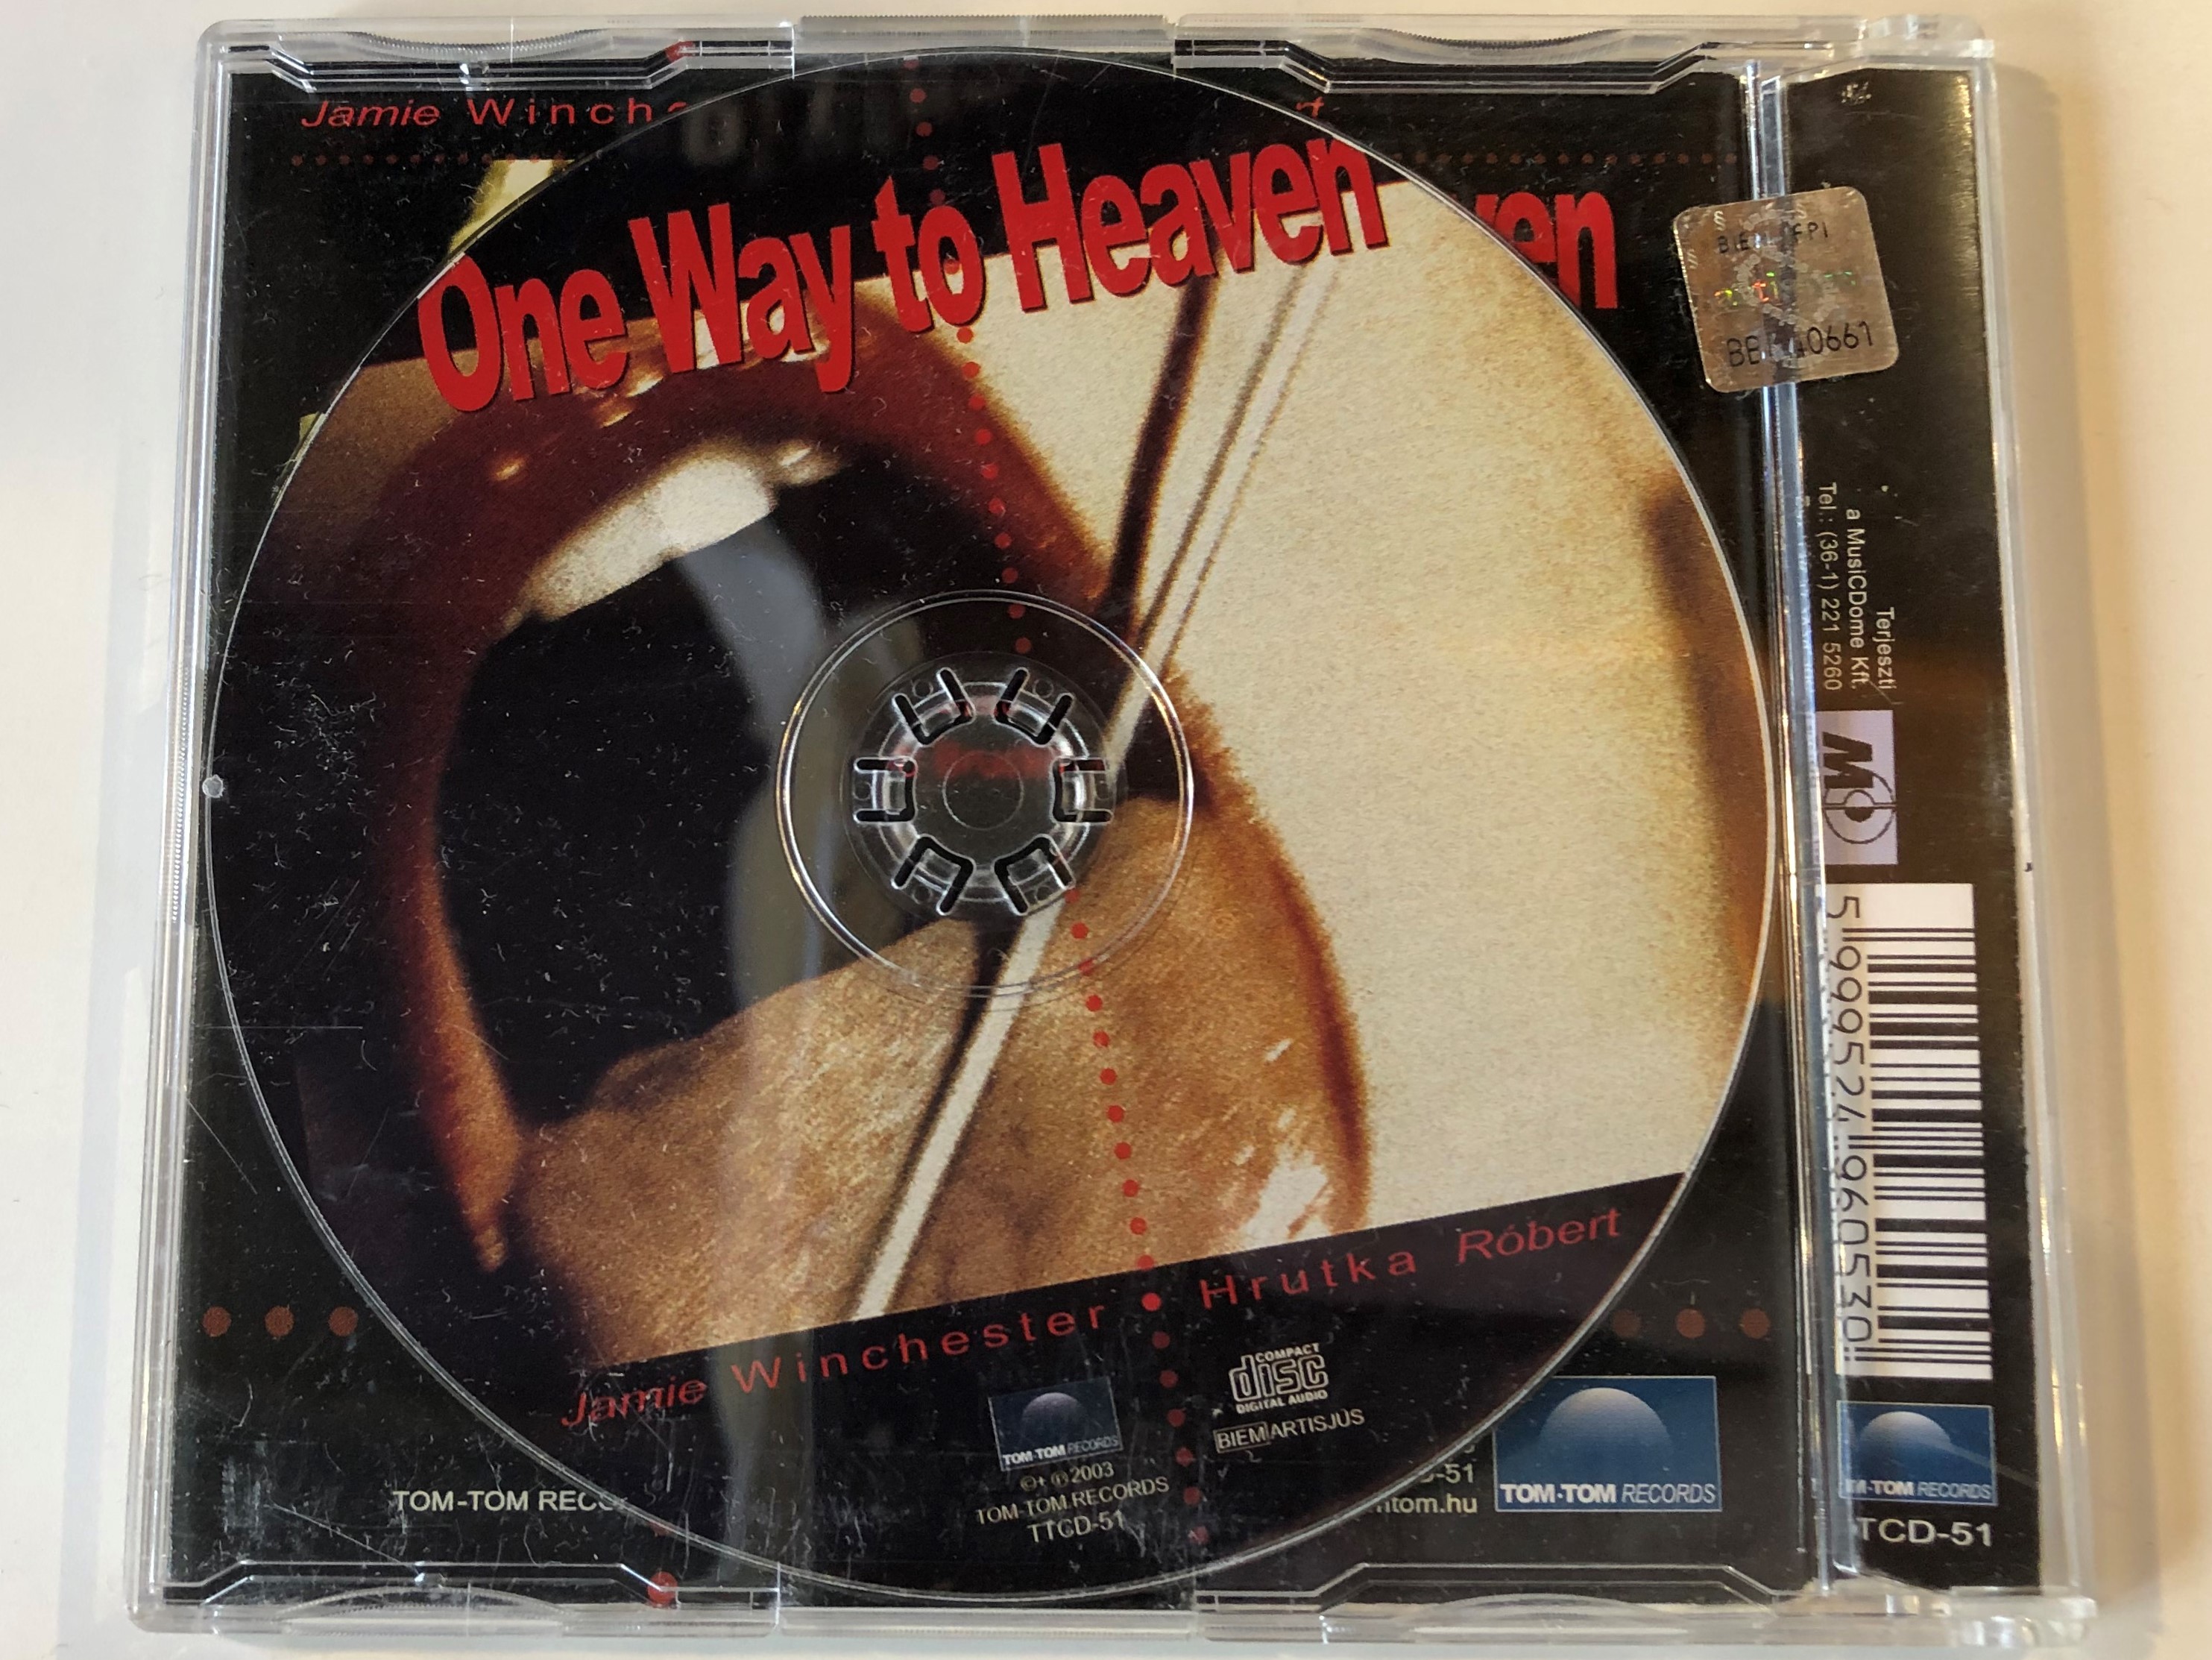 jamie-winchester-hrutka-r-bert-one-way-to-heaven-tom-tom-records-audio-cd-2003-ttcd-51-2-.jpg